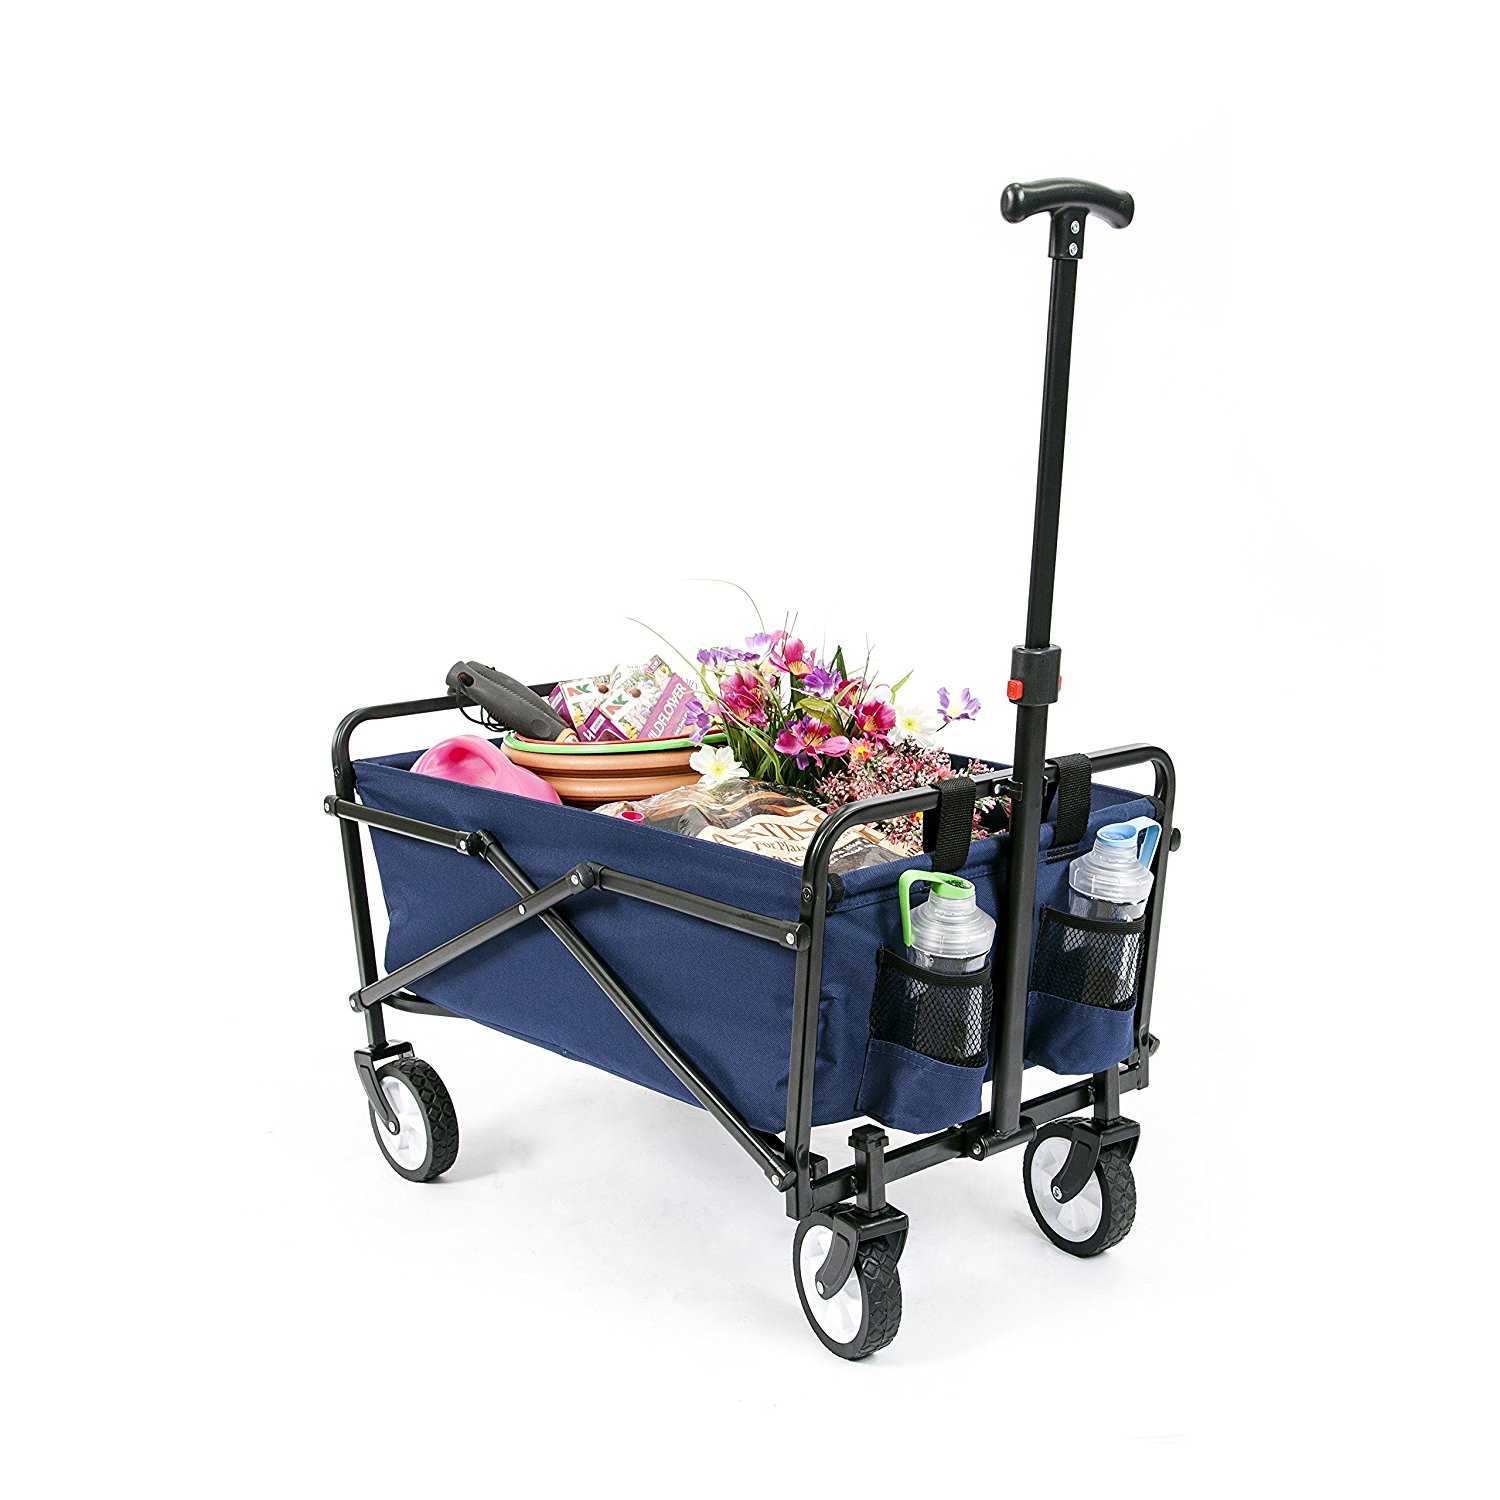 YSC Wagon Garden Folding Utility shopping [Beach Red/Navy Blue] Cart